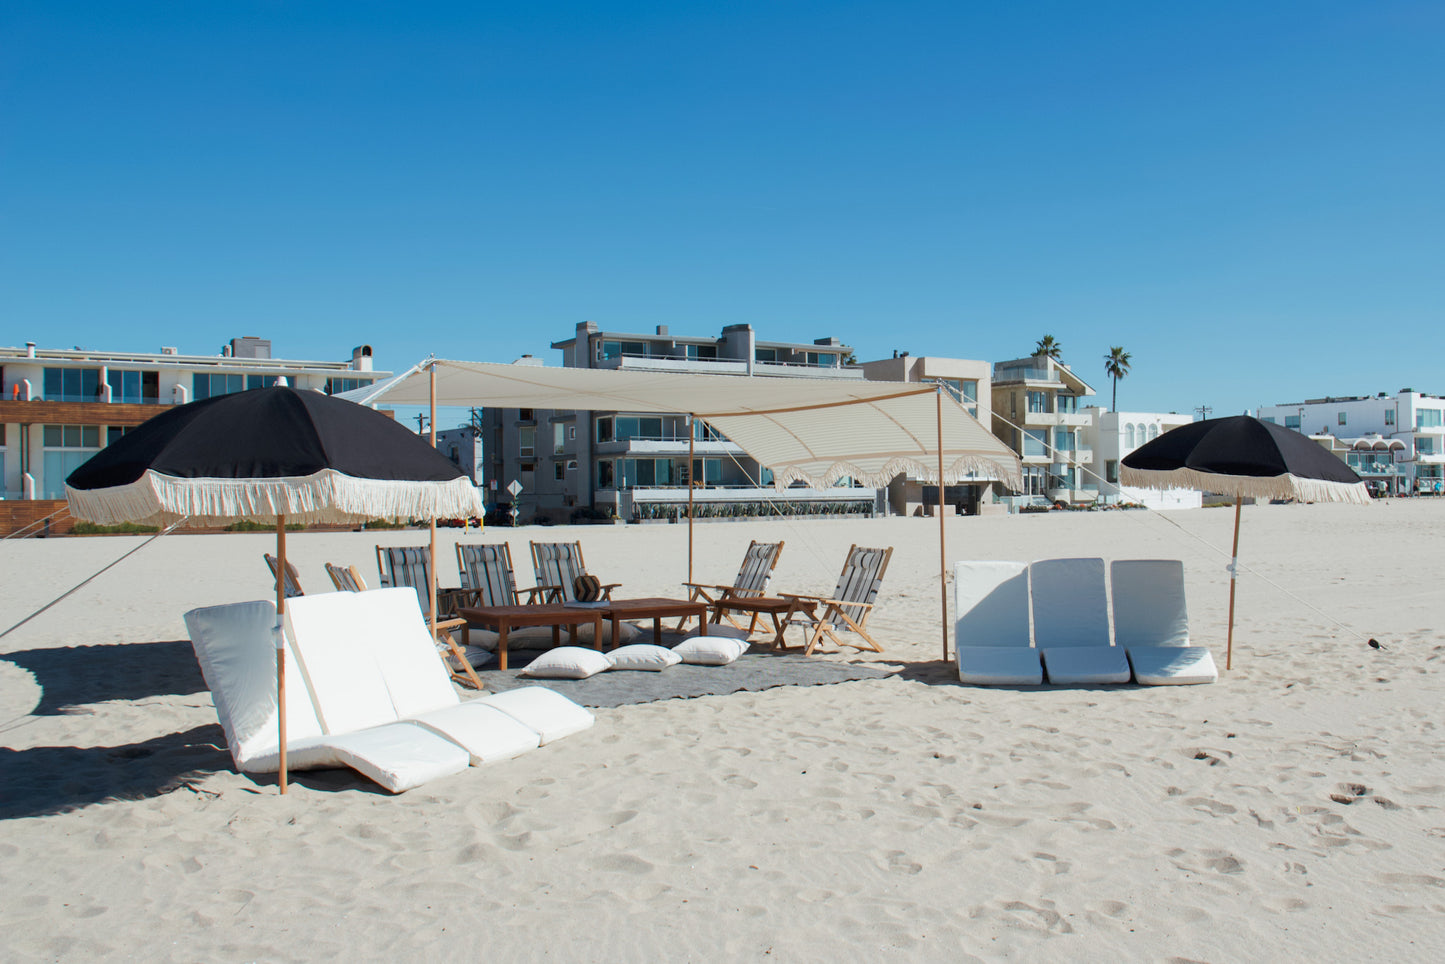 Luxe Beach Lounge Cabana Rental for Luxurious Beach Experiences